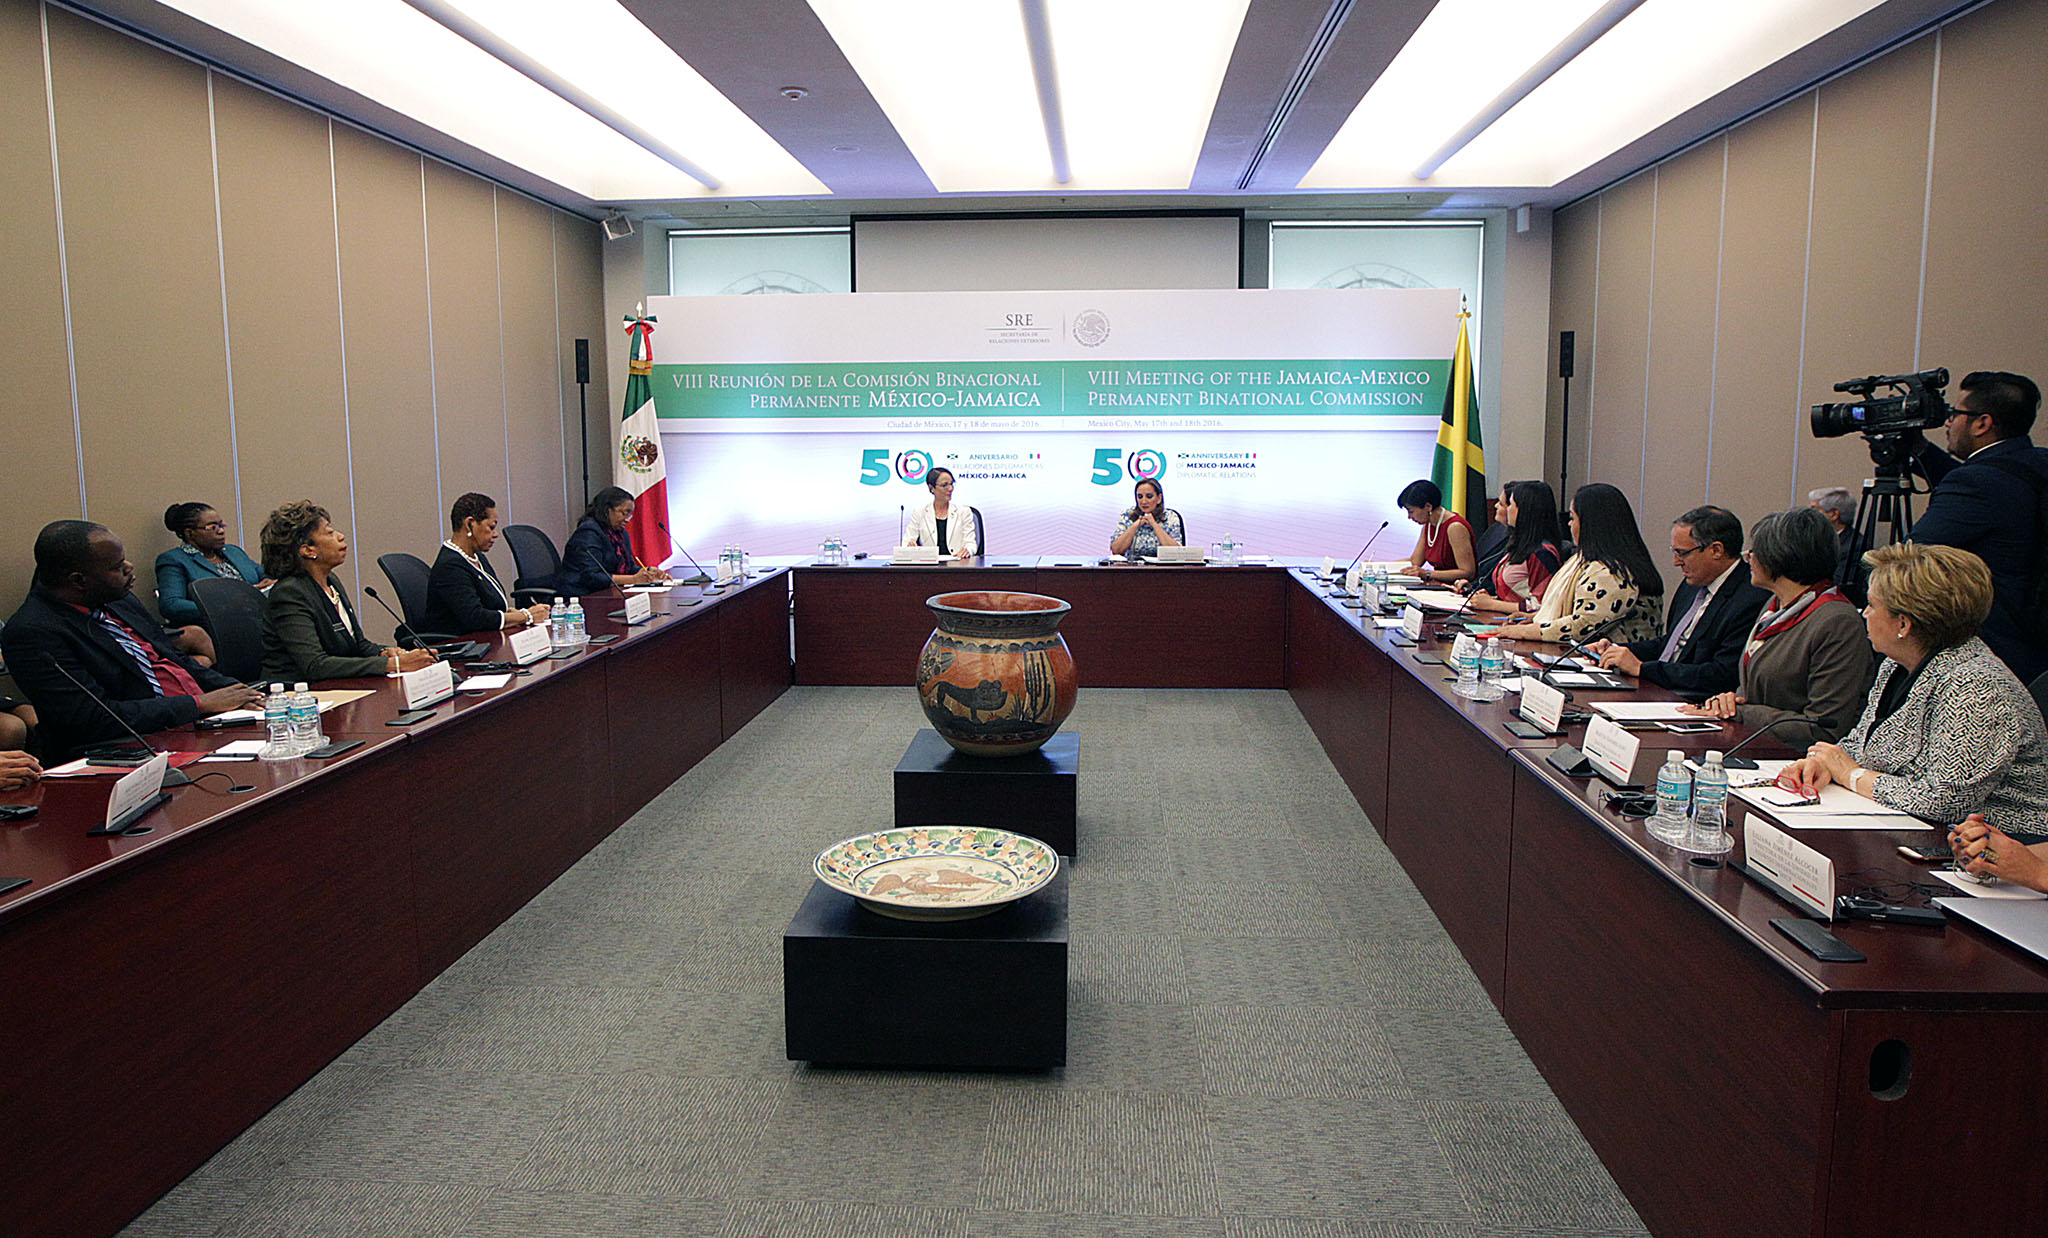 VIII Reunión de la Comisión Binacional Permanente México-Jamaica.